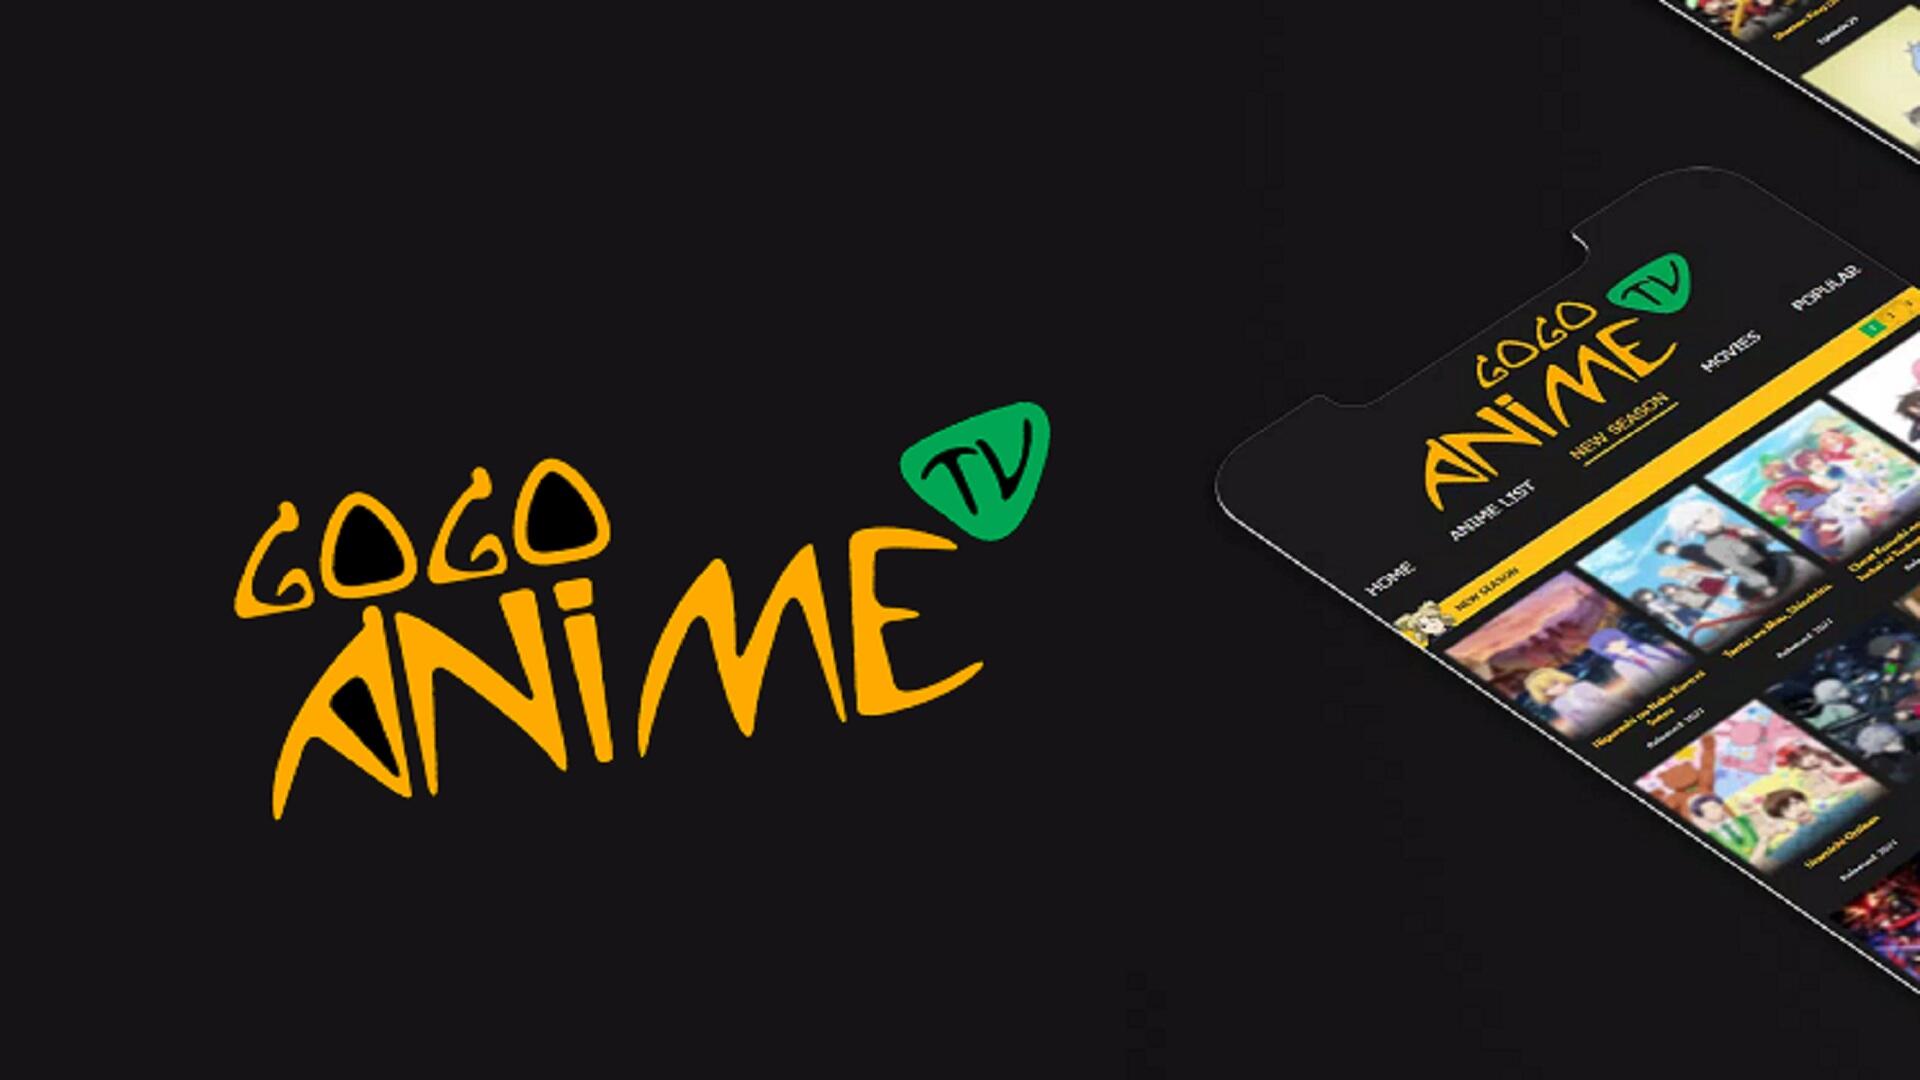 GoGoAnime Anime Online APK MOD (Premium Unlocked/ VIP)